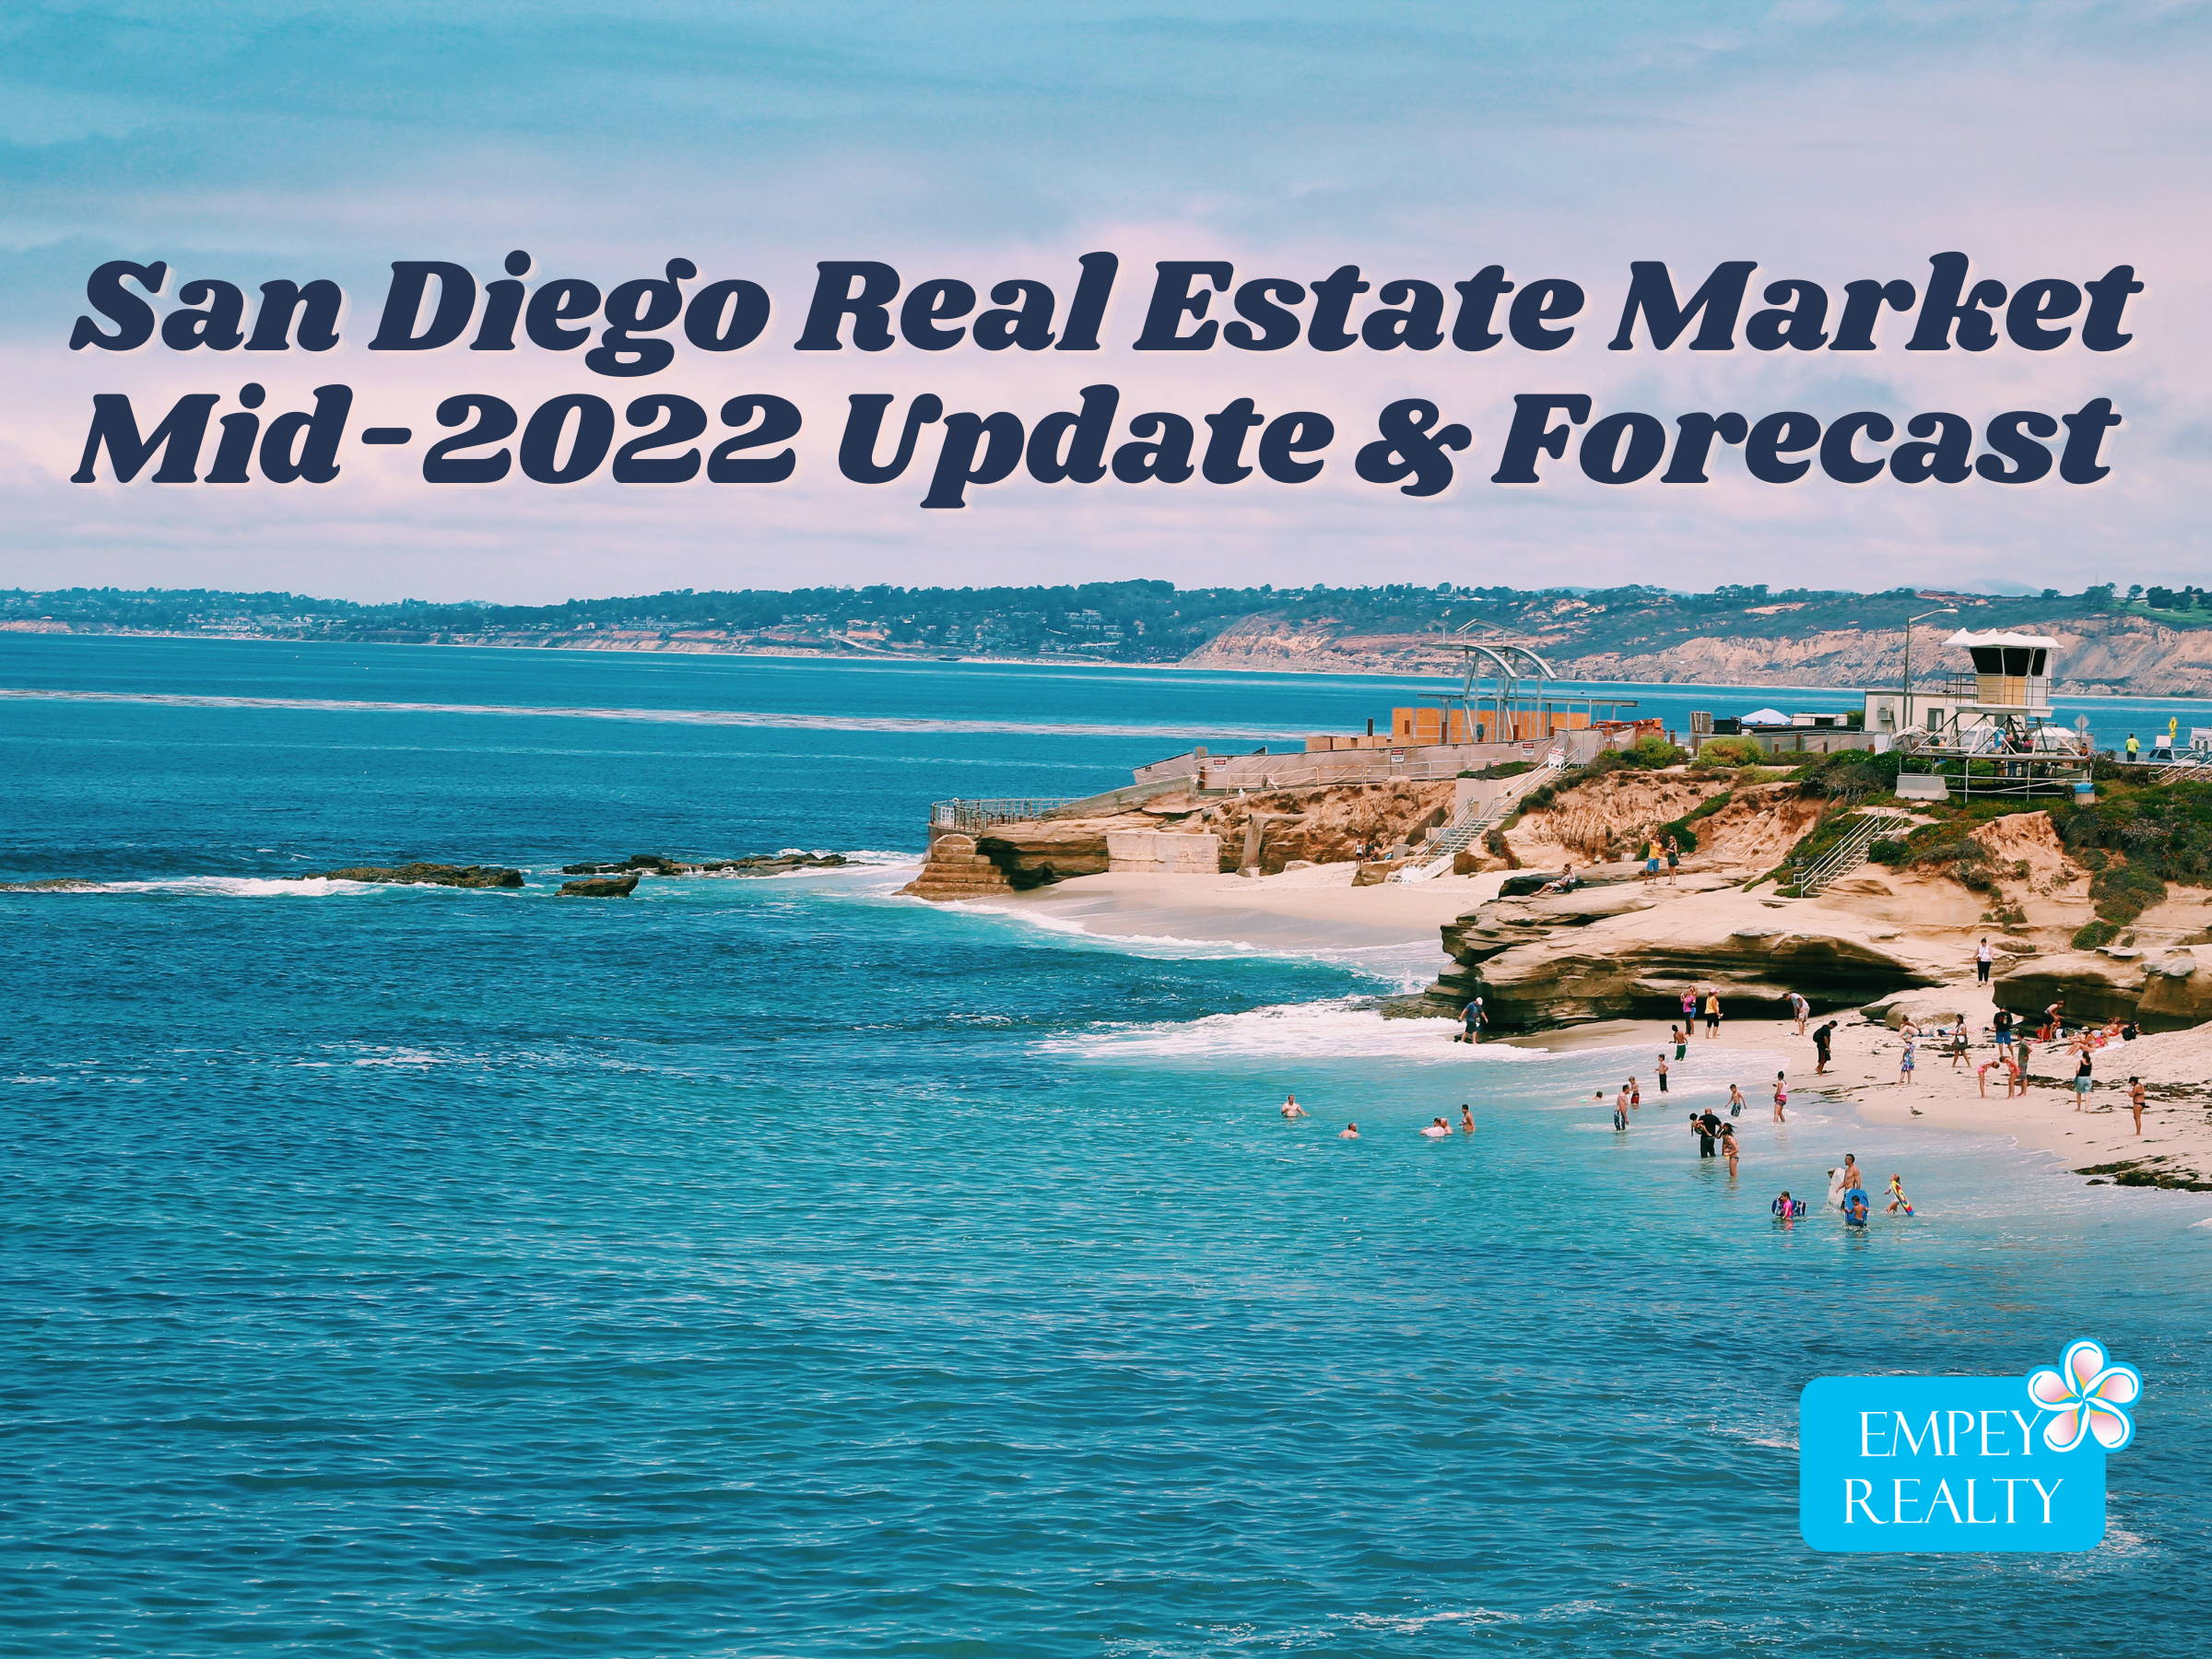 San Diego Real Estate Market Mid-2022 Update & Forecast